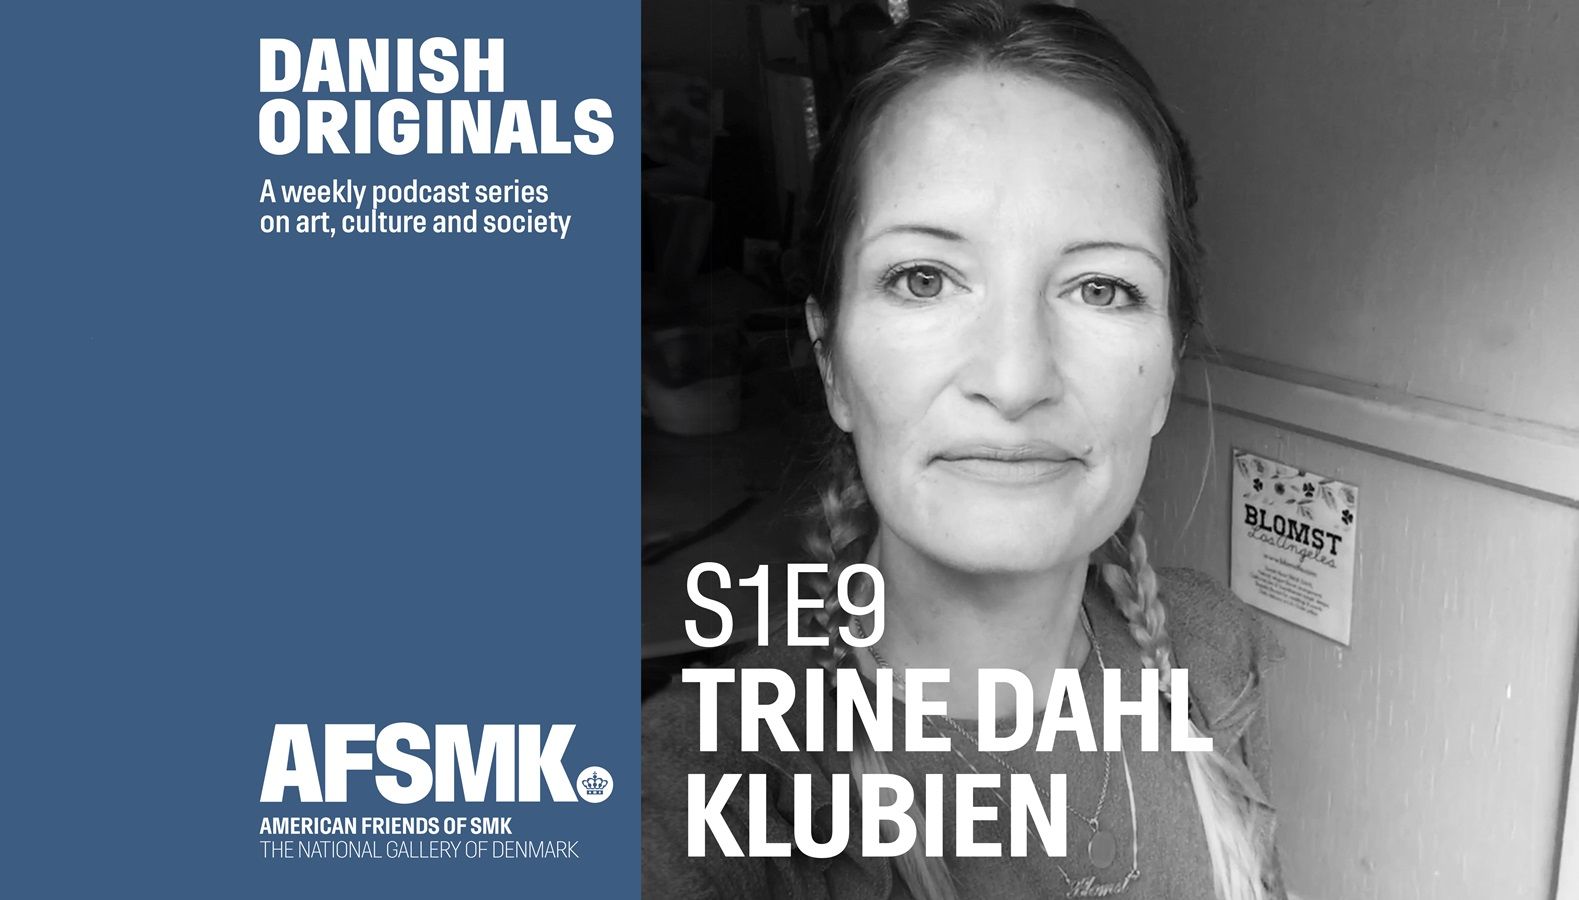 Danish Originals S1 E9: Trine Dahl Klubien